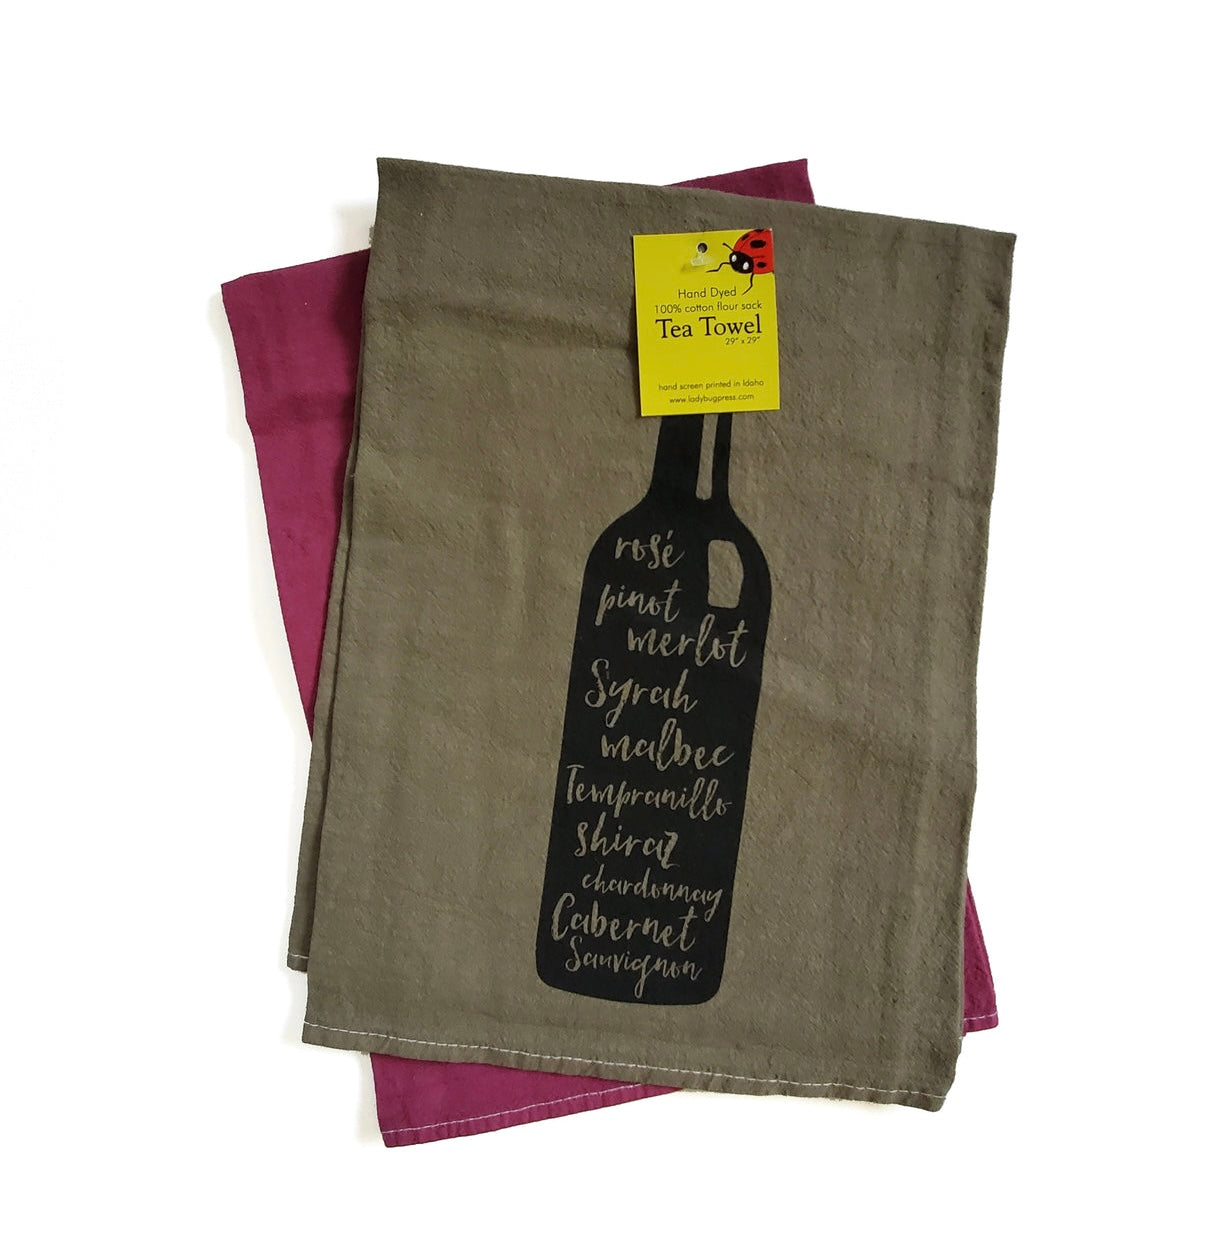 Dyed Wine Bottle tea towel, flour sack dish towel